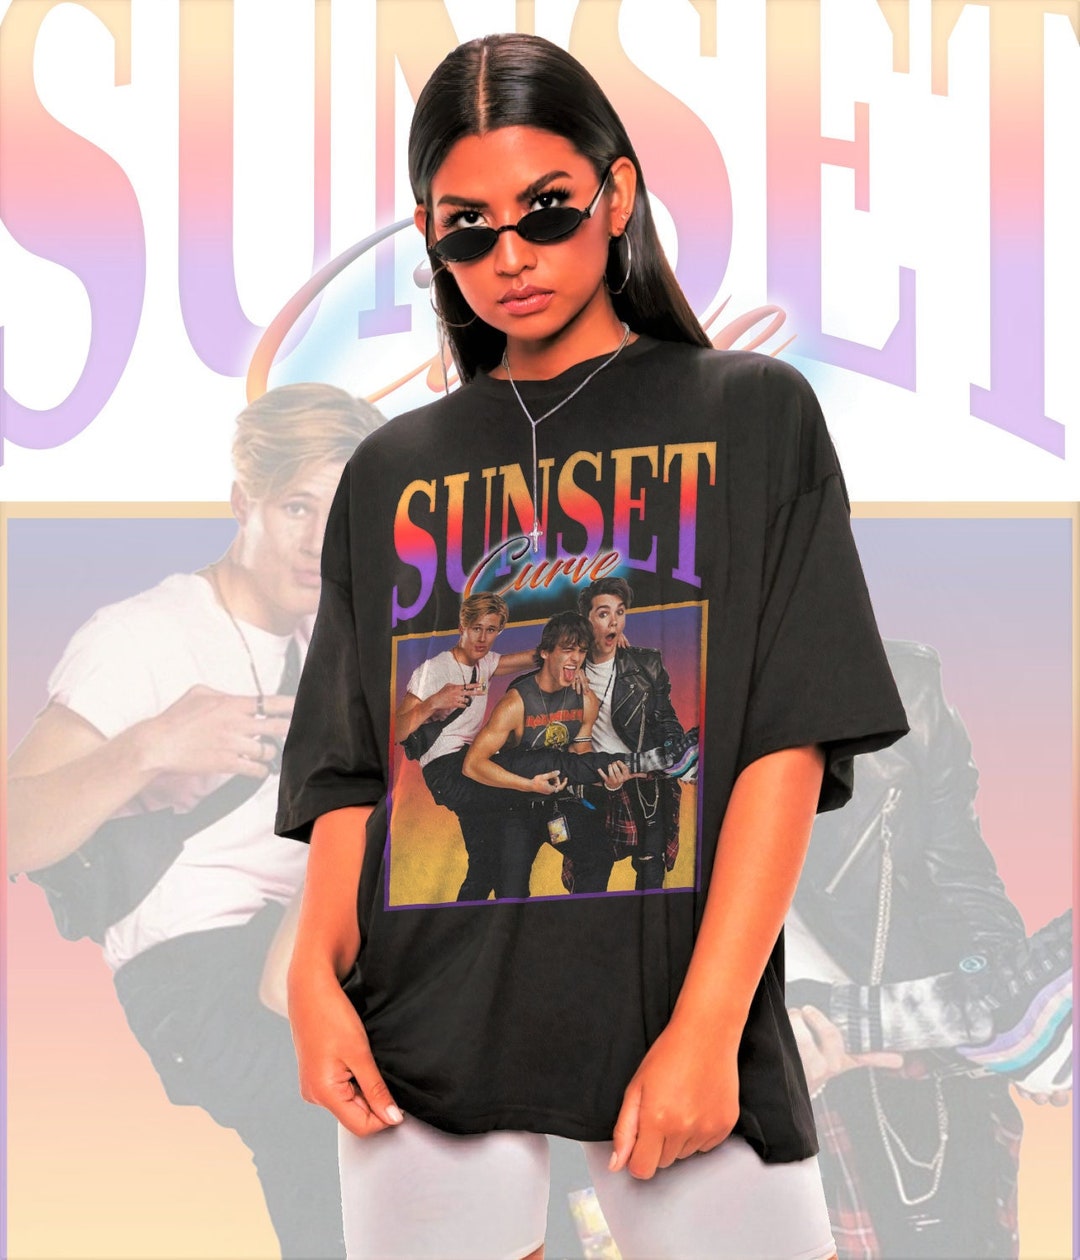 Sunset Curve Shirt julie and the Phantoms Shirt,sunset Curve Sweatshirt ...